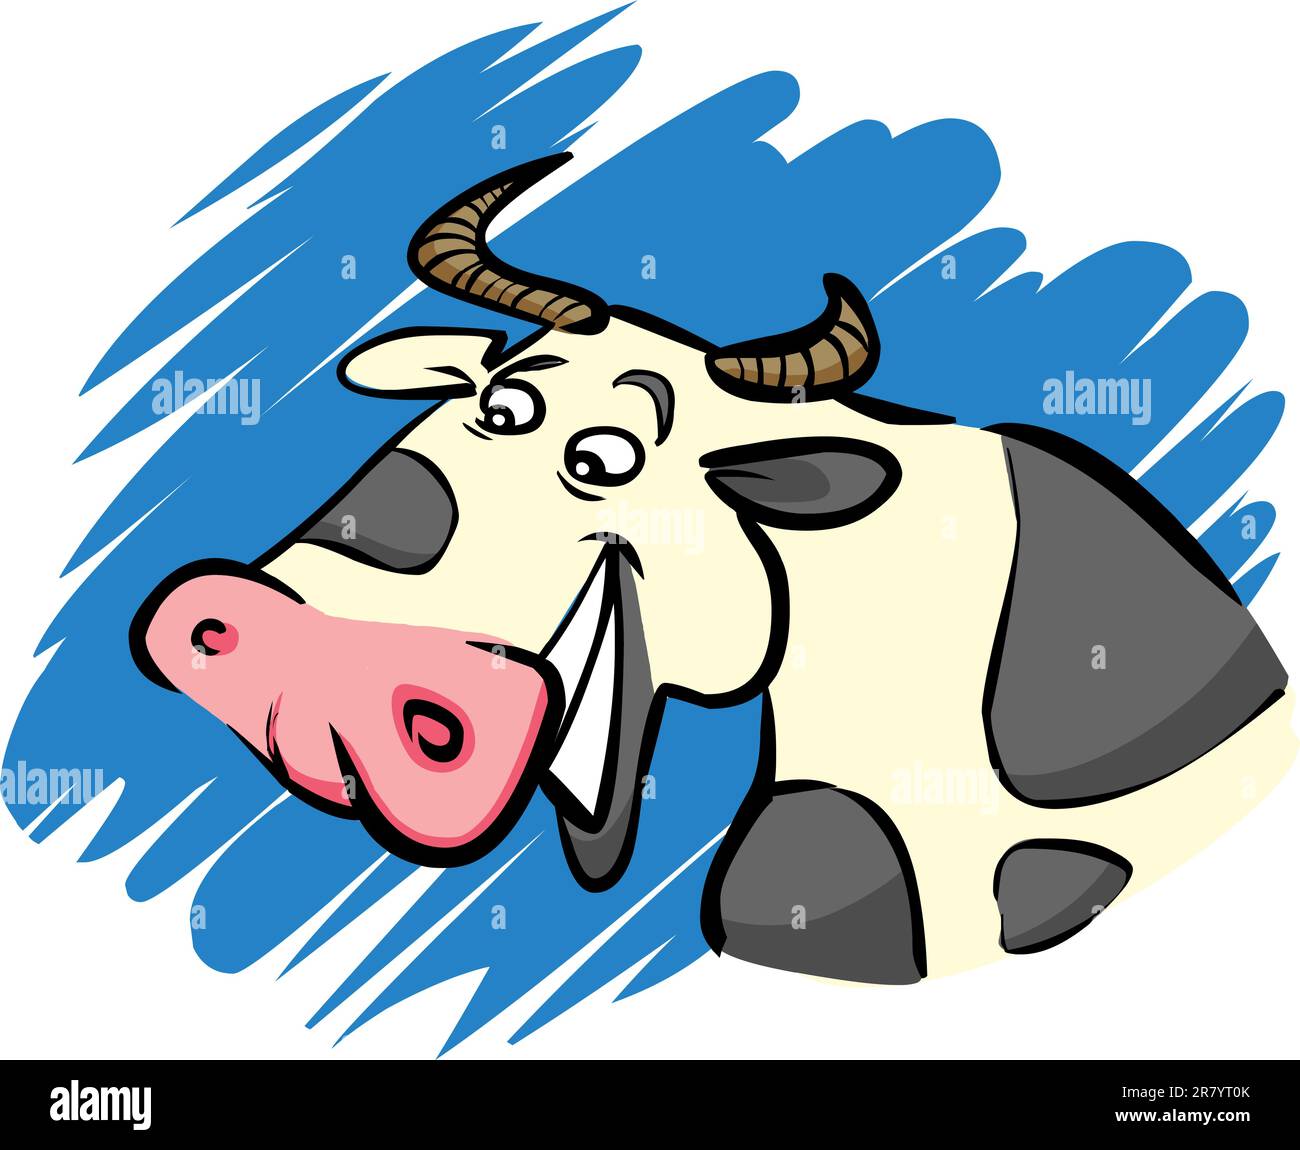 cartoon humorous illustration of funny farm cow Stock Vector